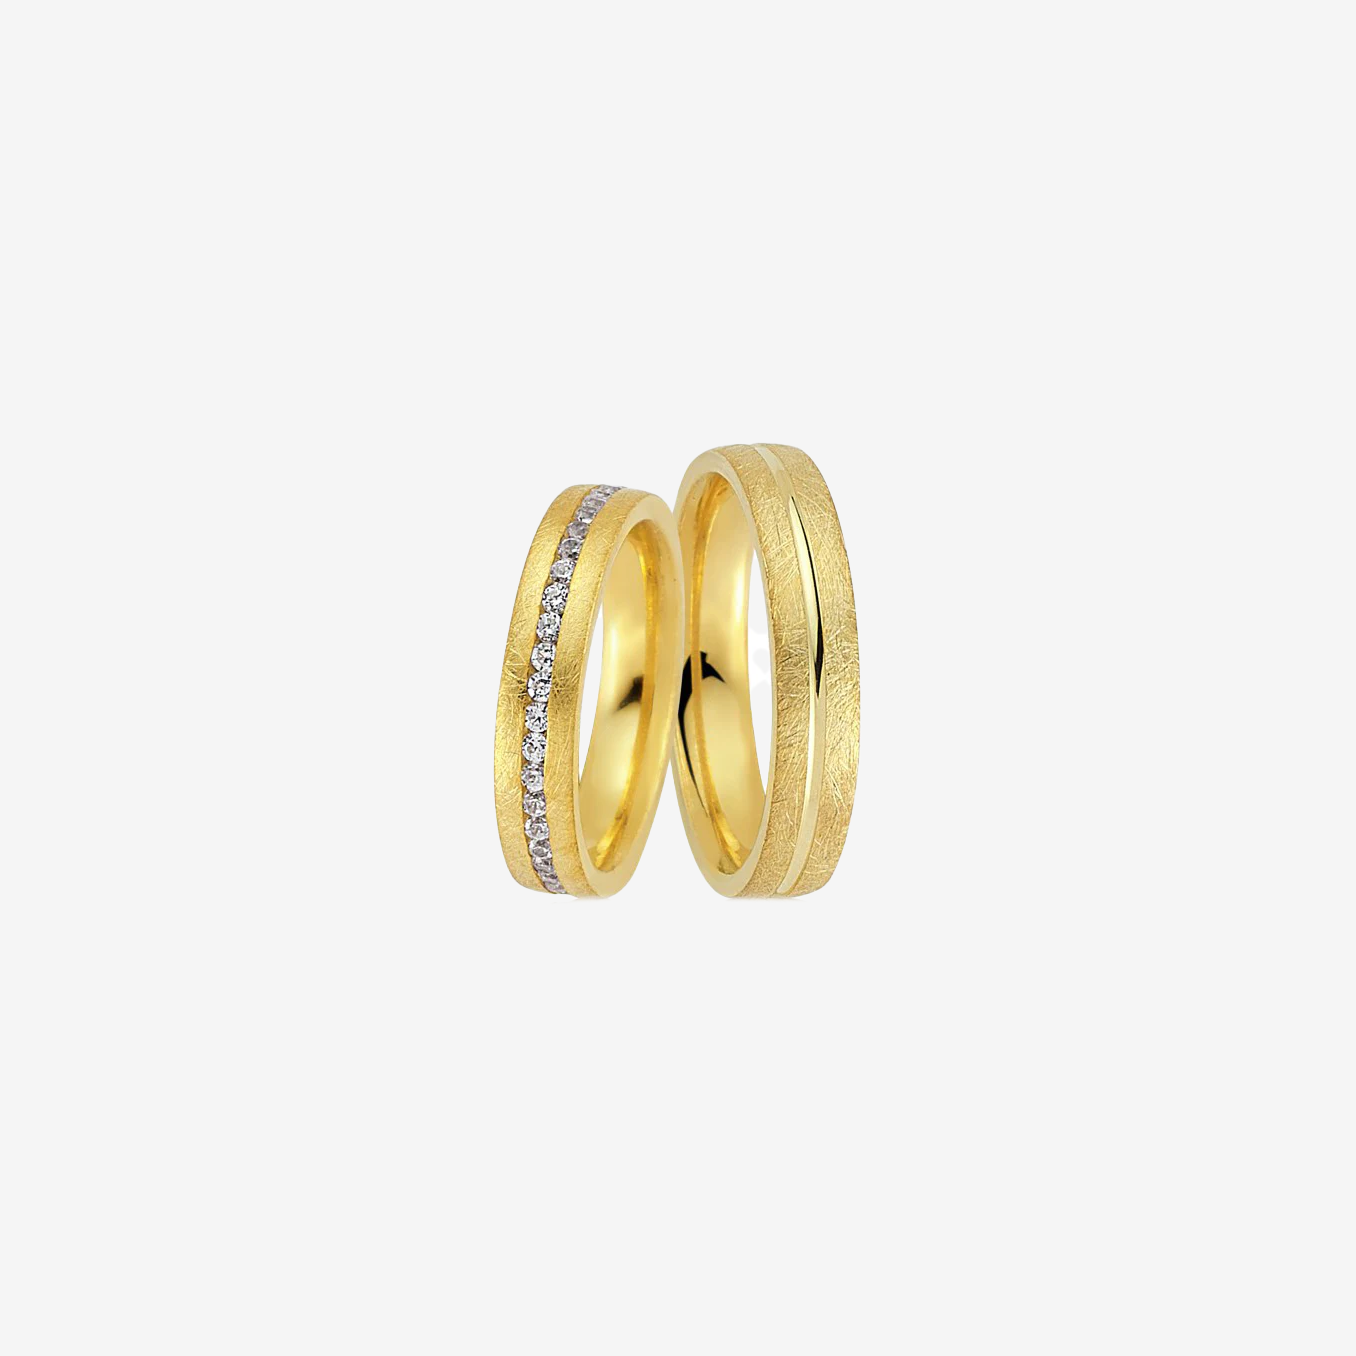 Chevron Diamond Wedding Rings - Yellow Gold - Pair